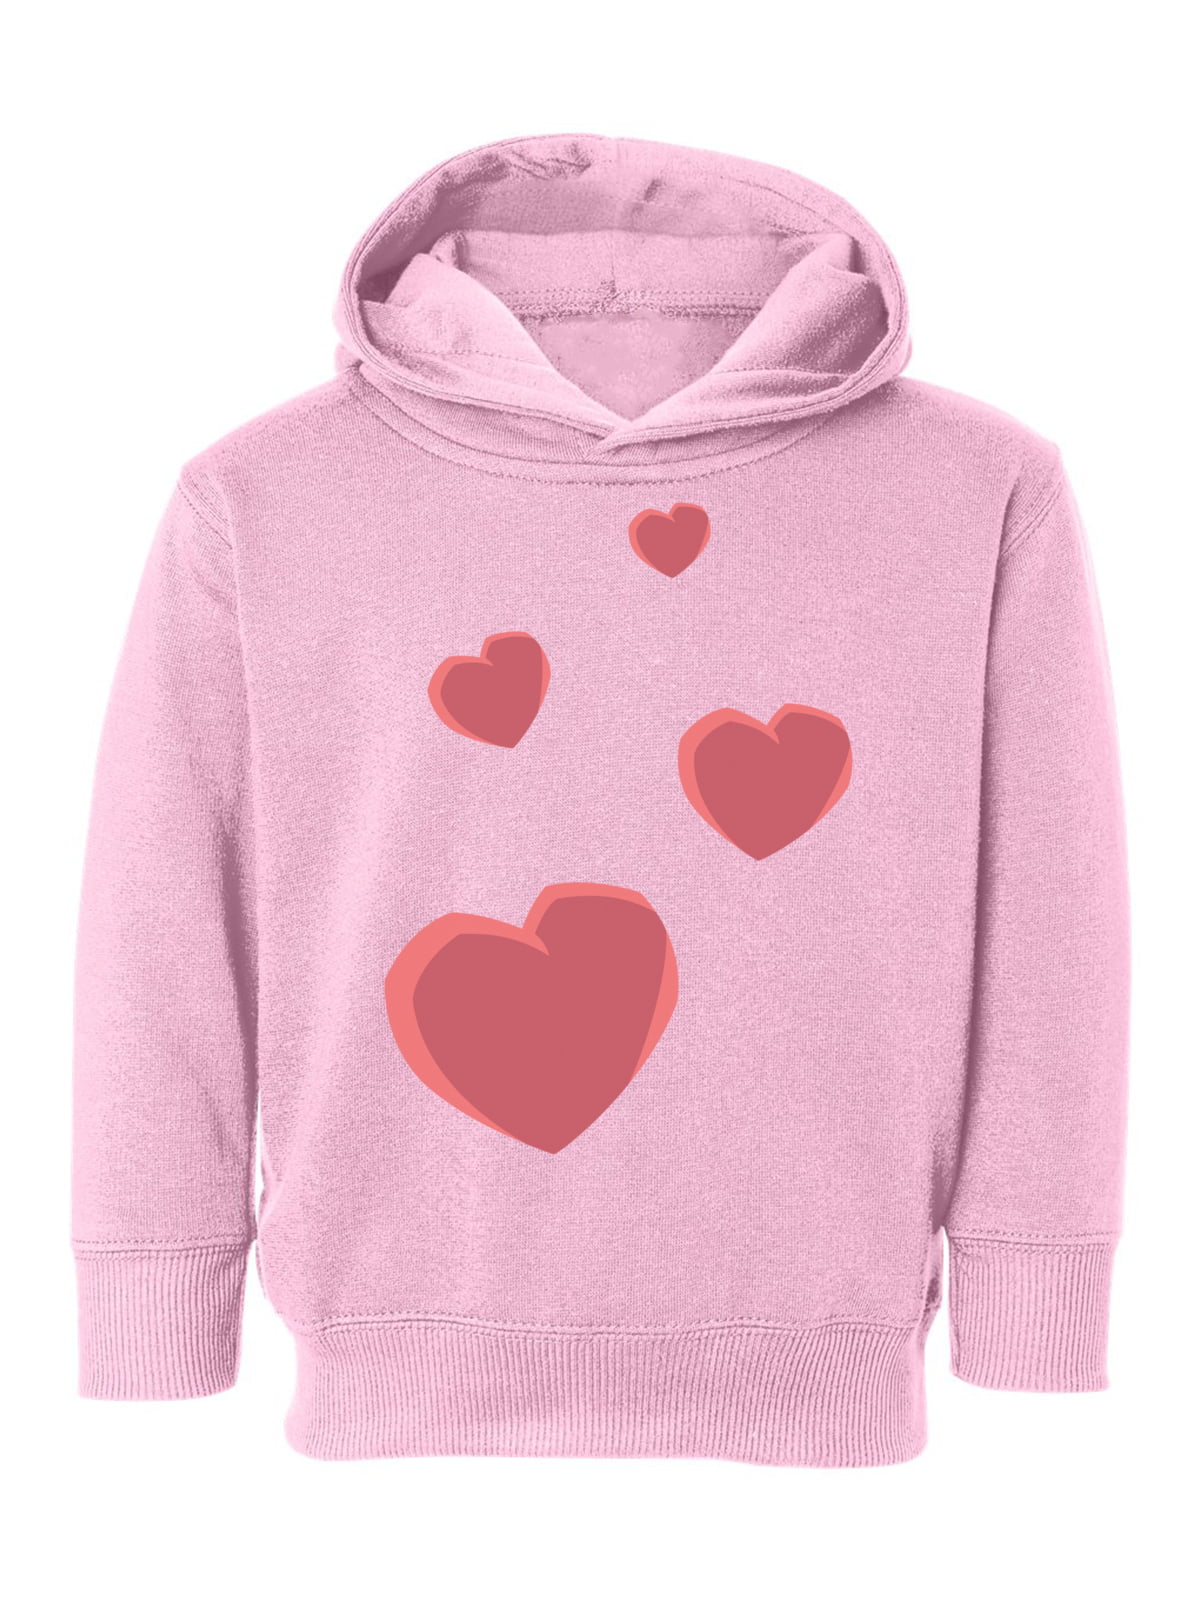 I Love Heart Butties Black Kids Sweatshirt 